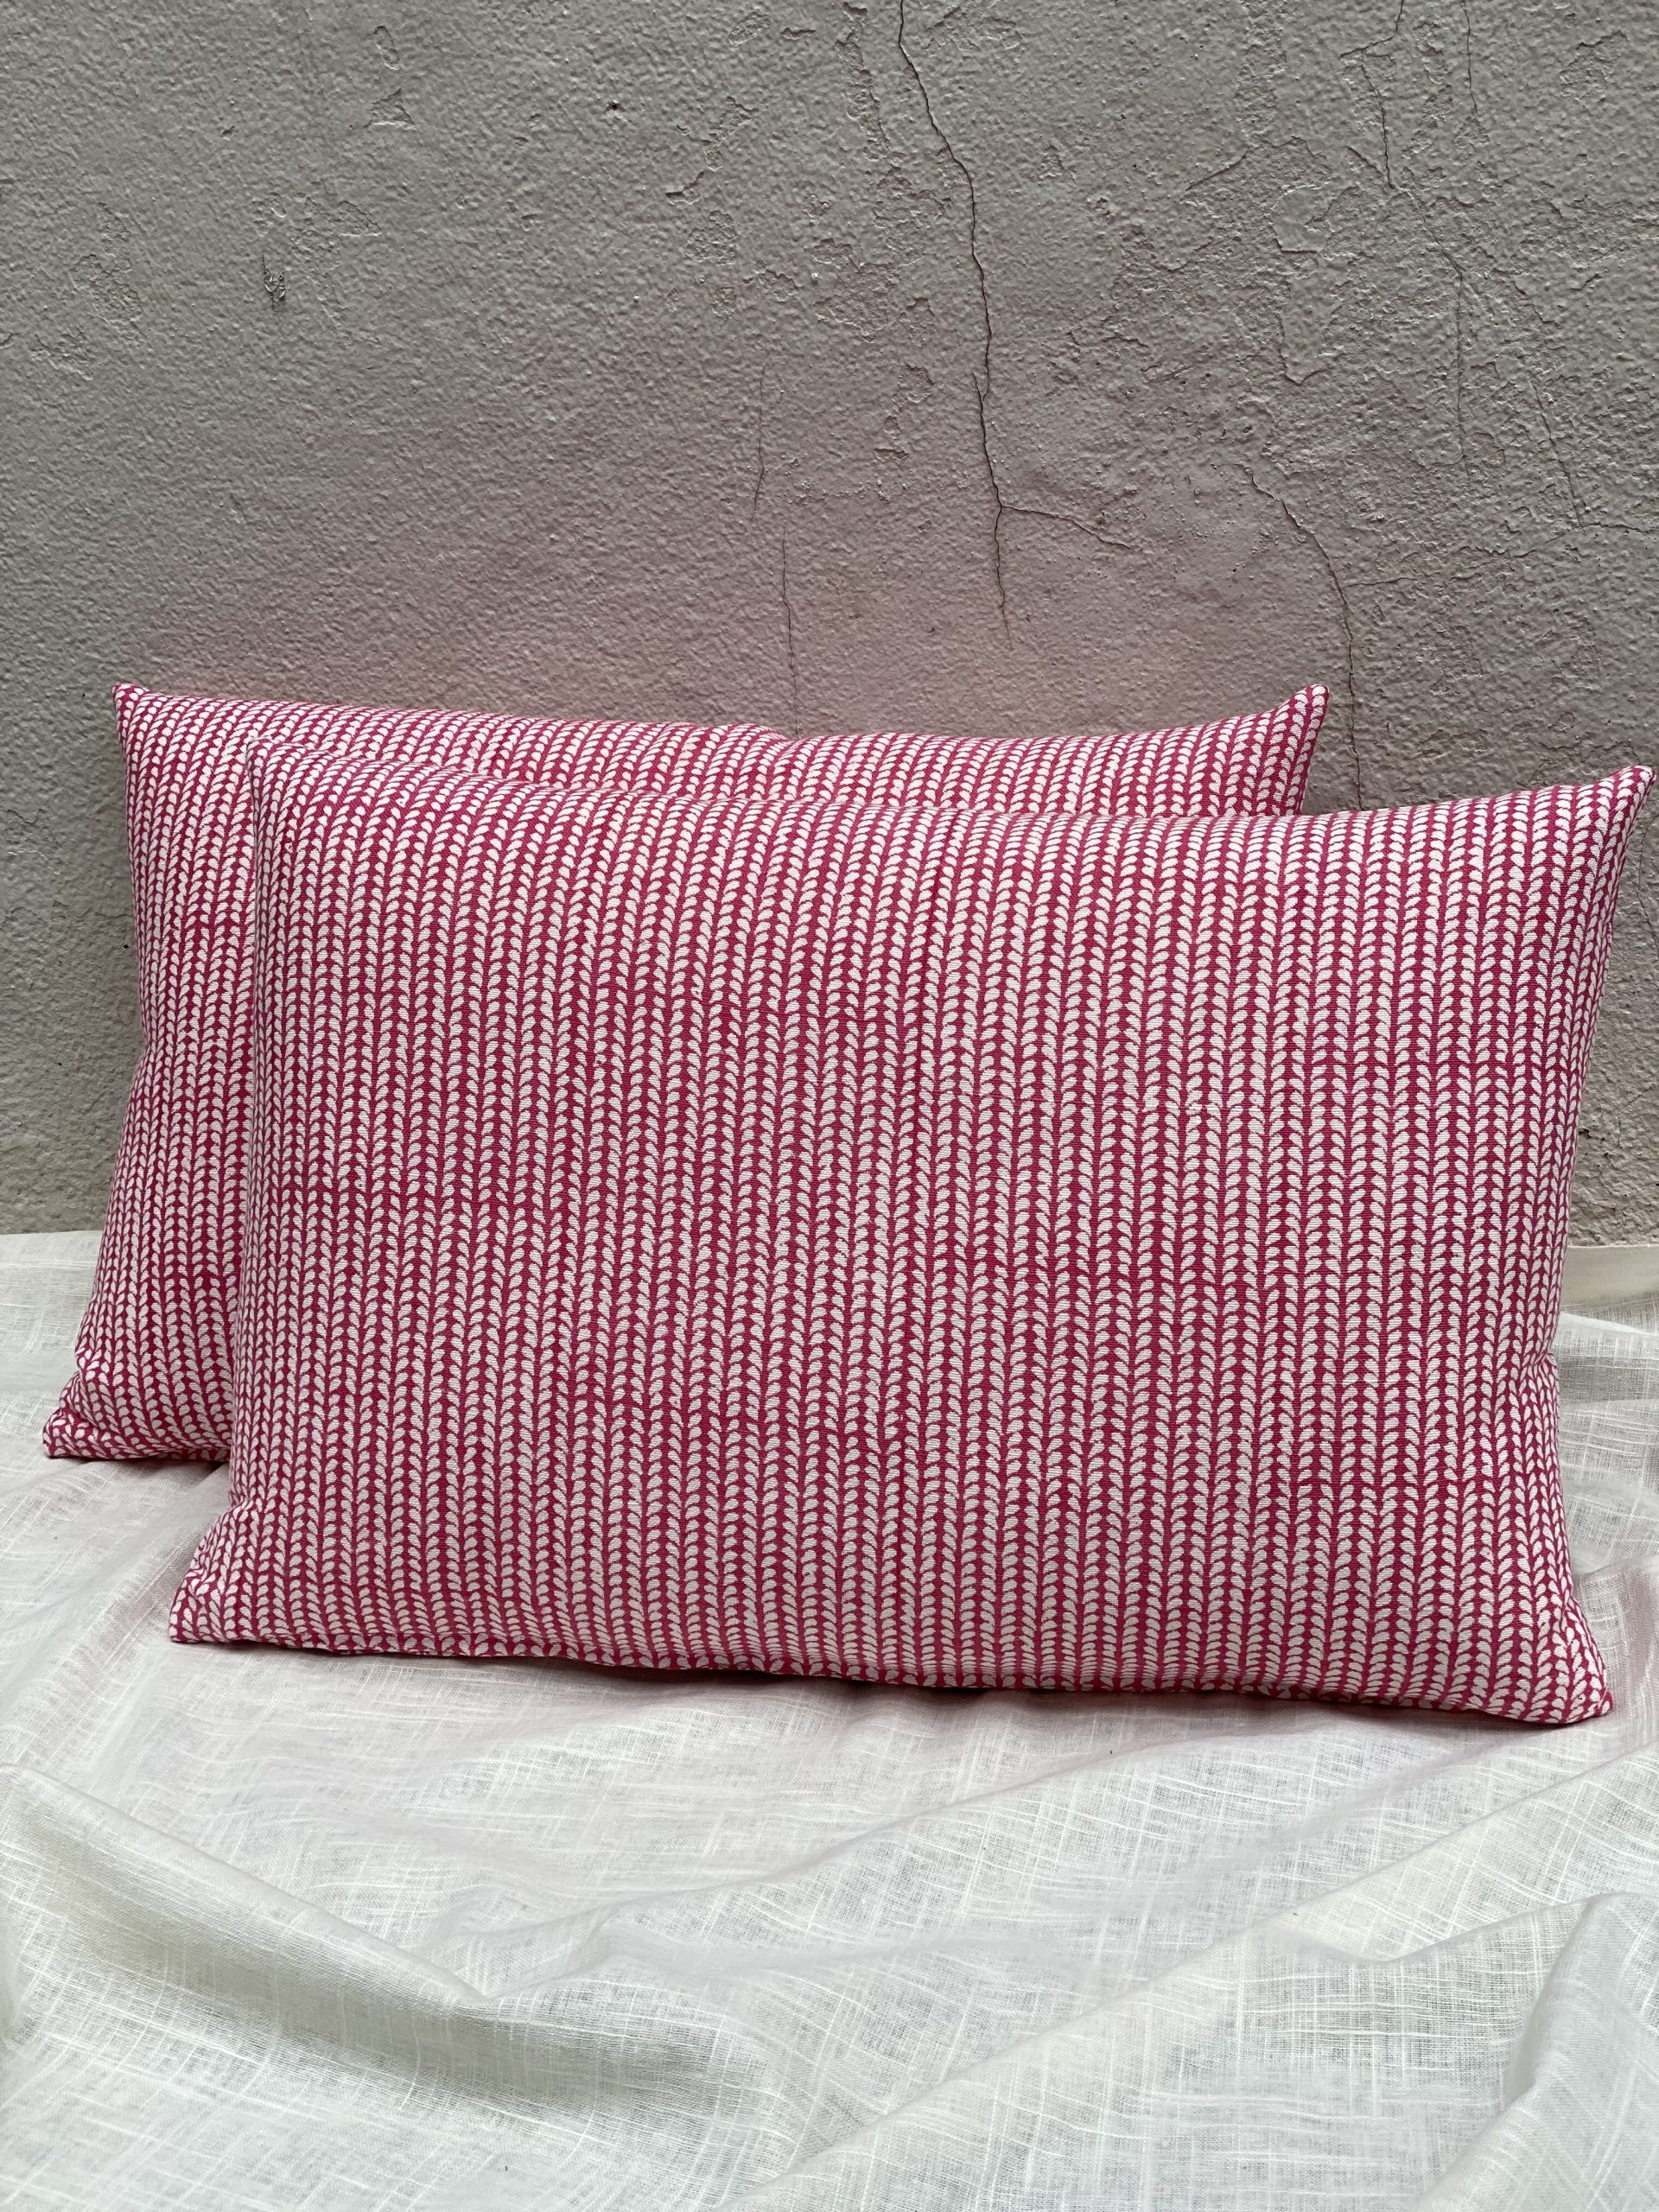 Small Pattern Pillows